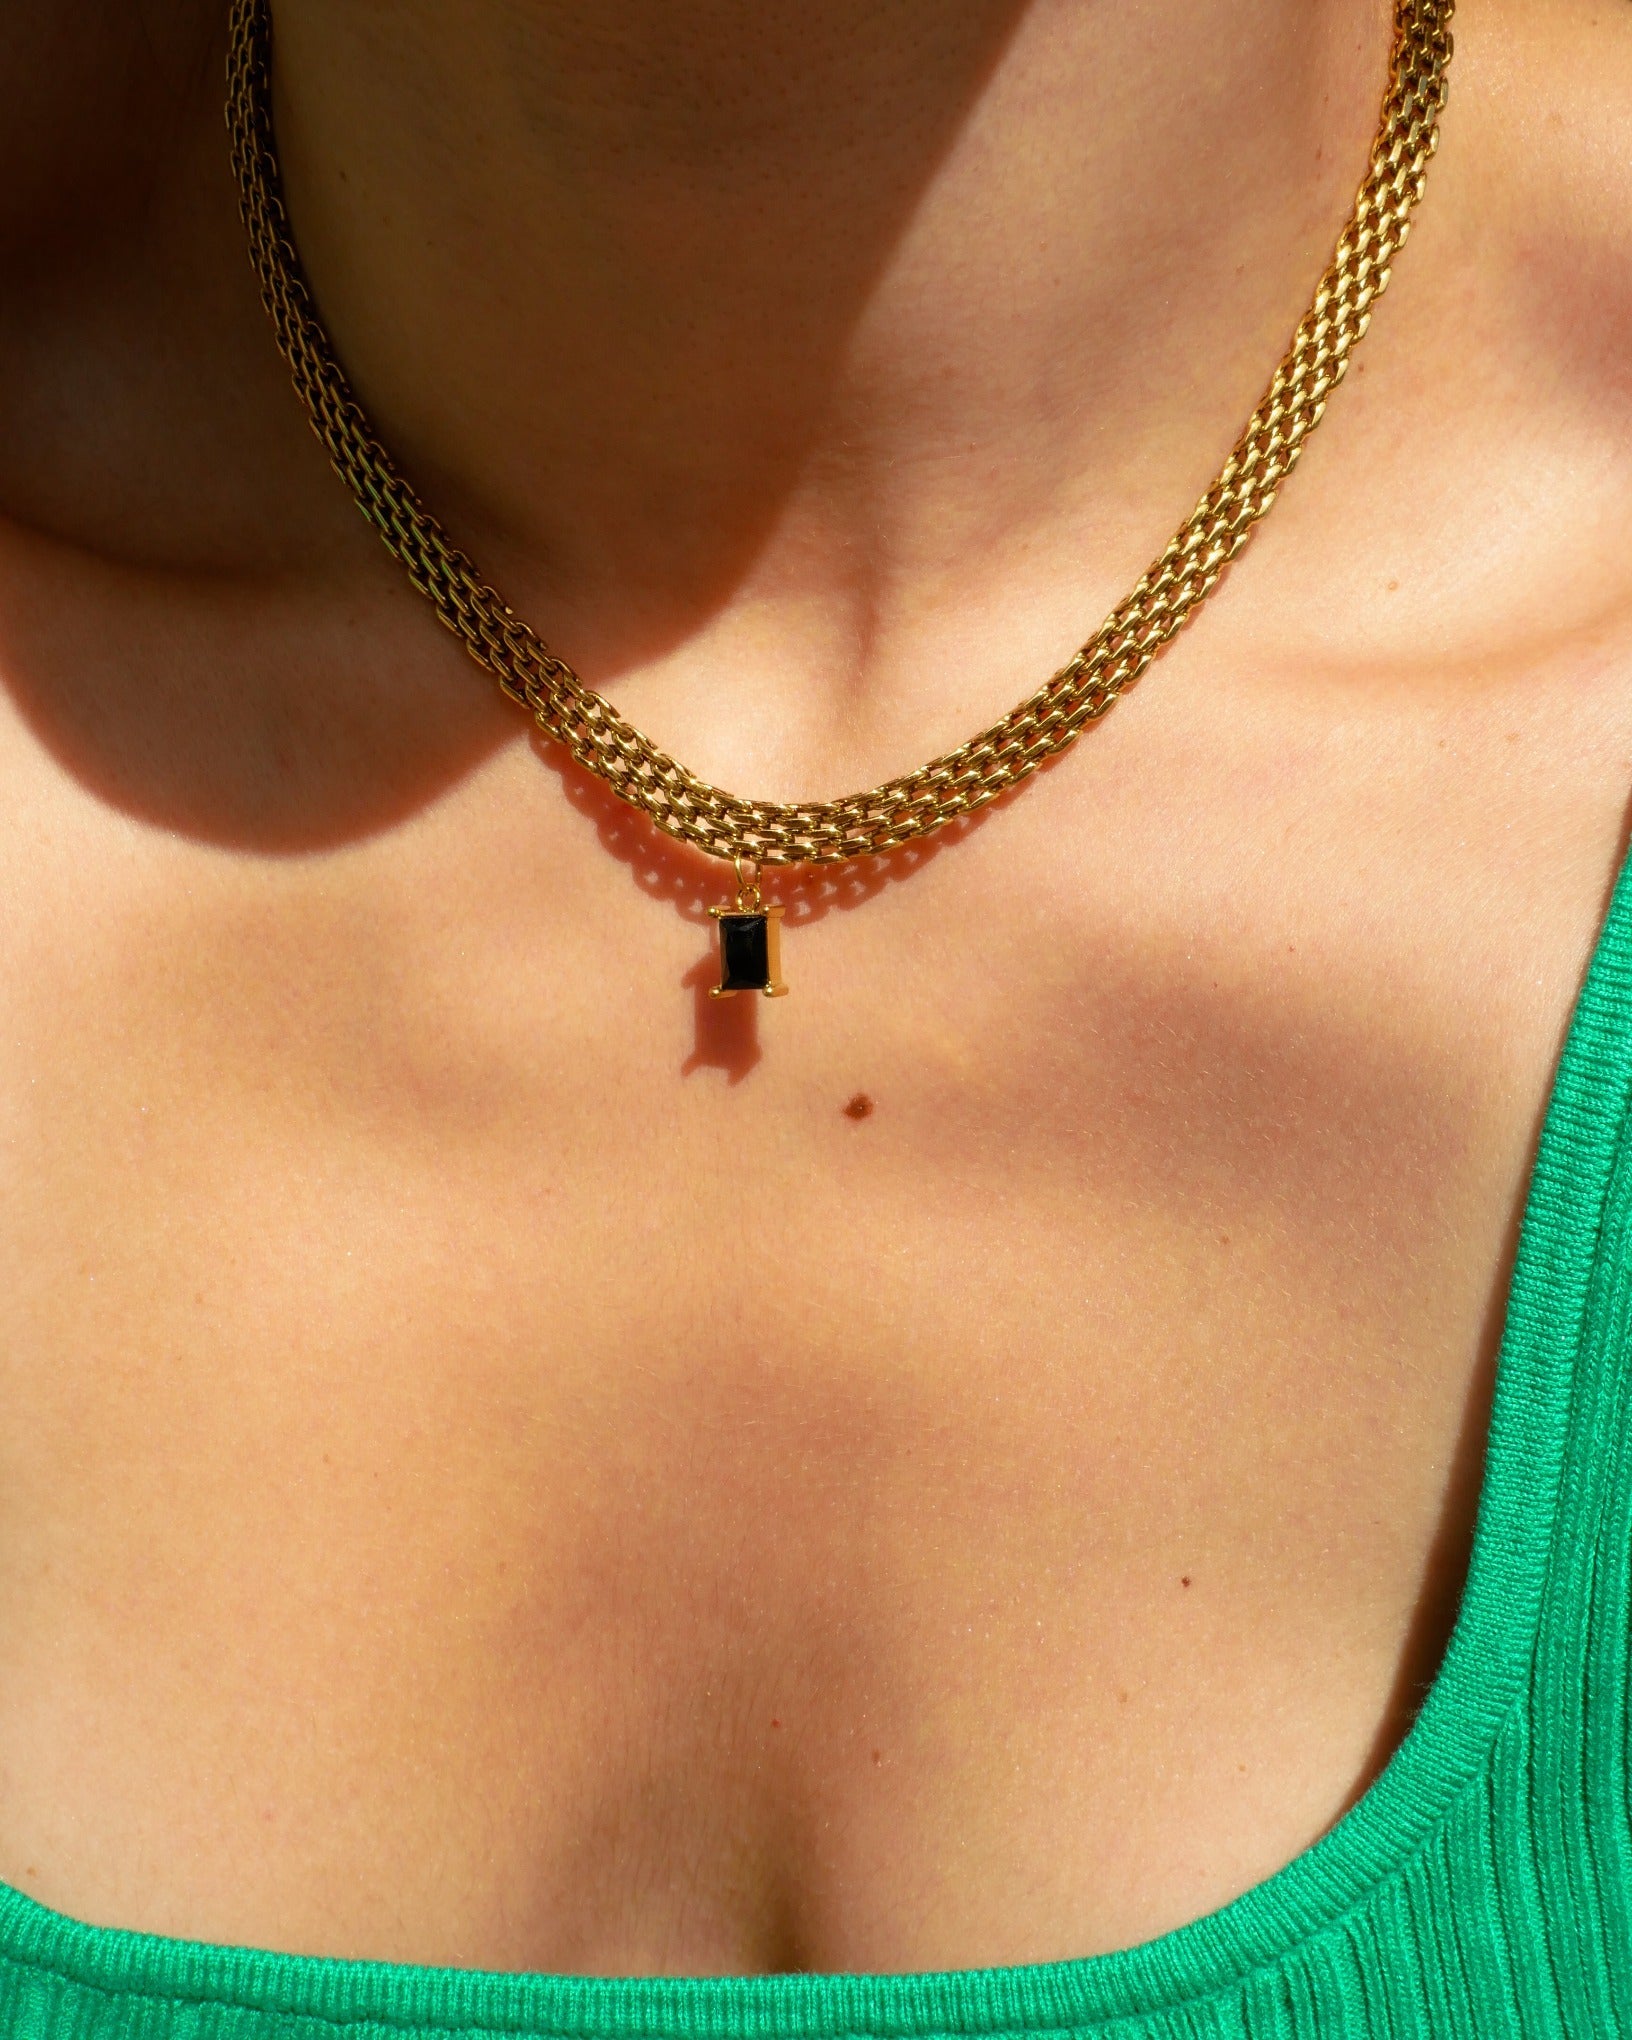 Delphine Pendant Gold Chain by Koréil Jewelry